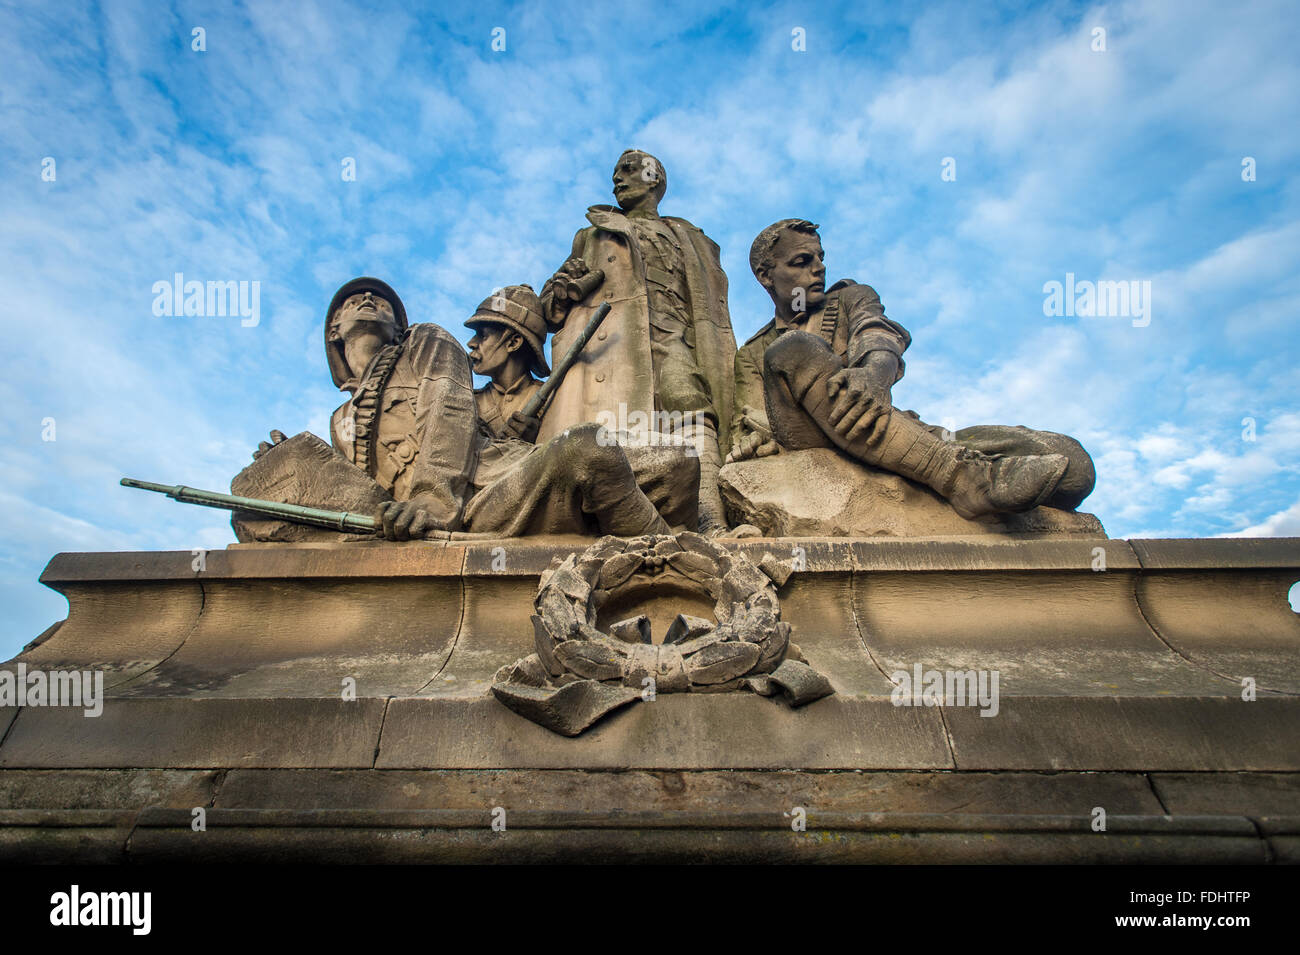 King's propias fronteras escocesas Memorial en Edimburgo Scotland Foto de stock